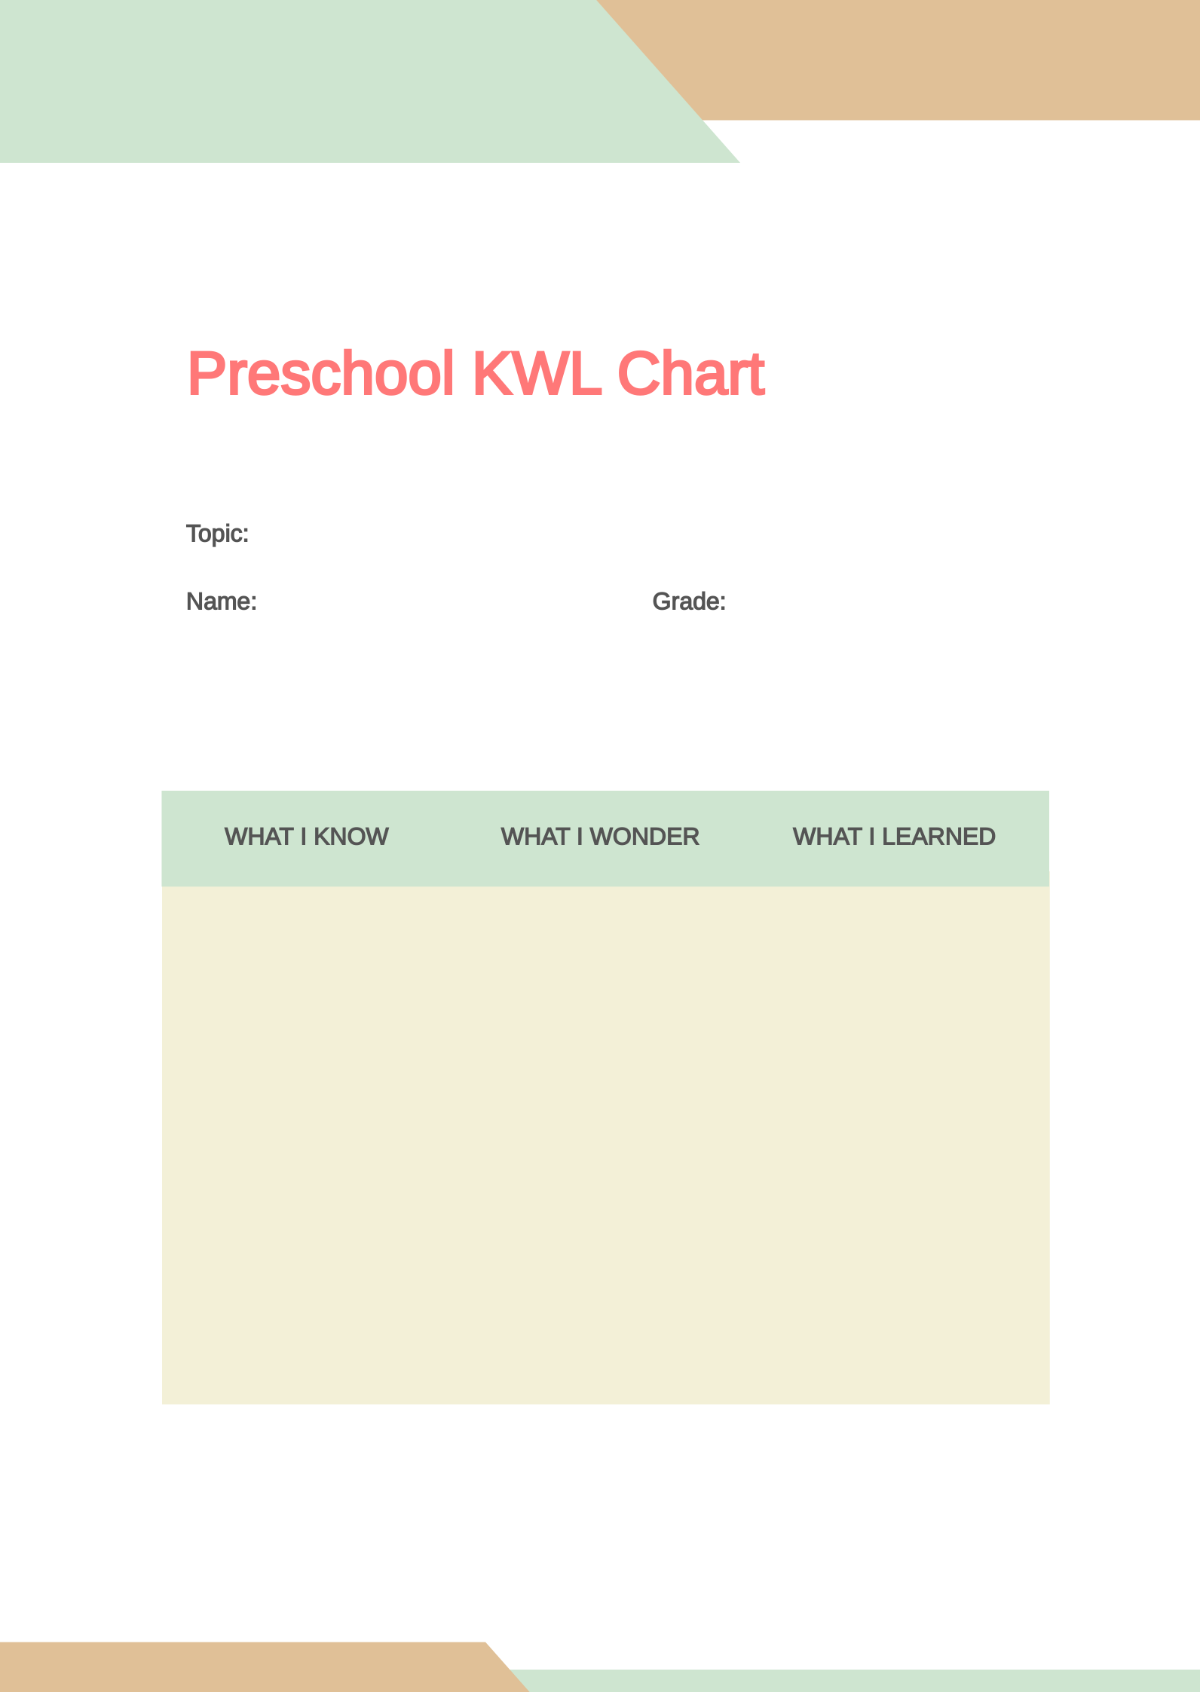 Preschool KWL Chart Template